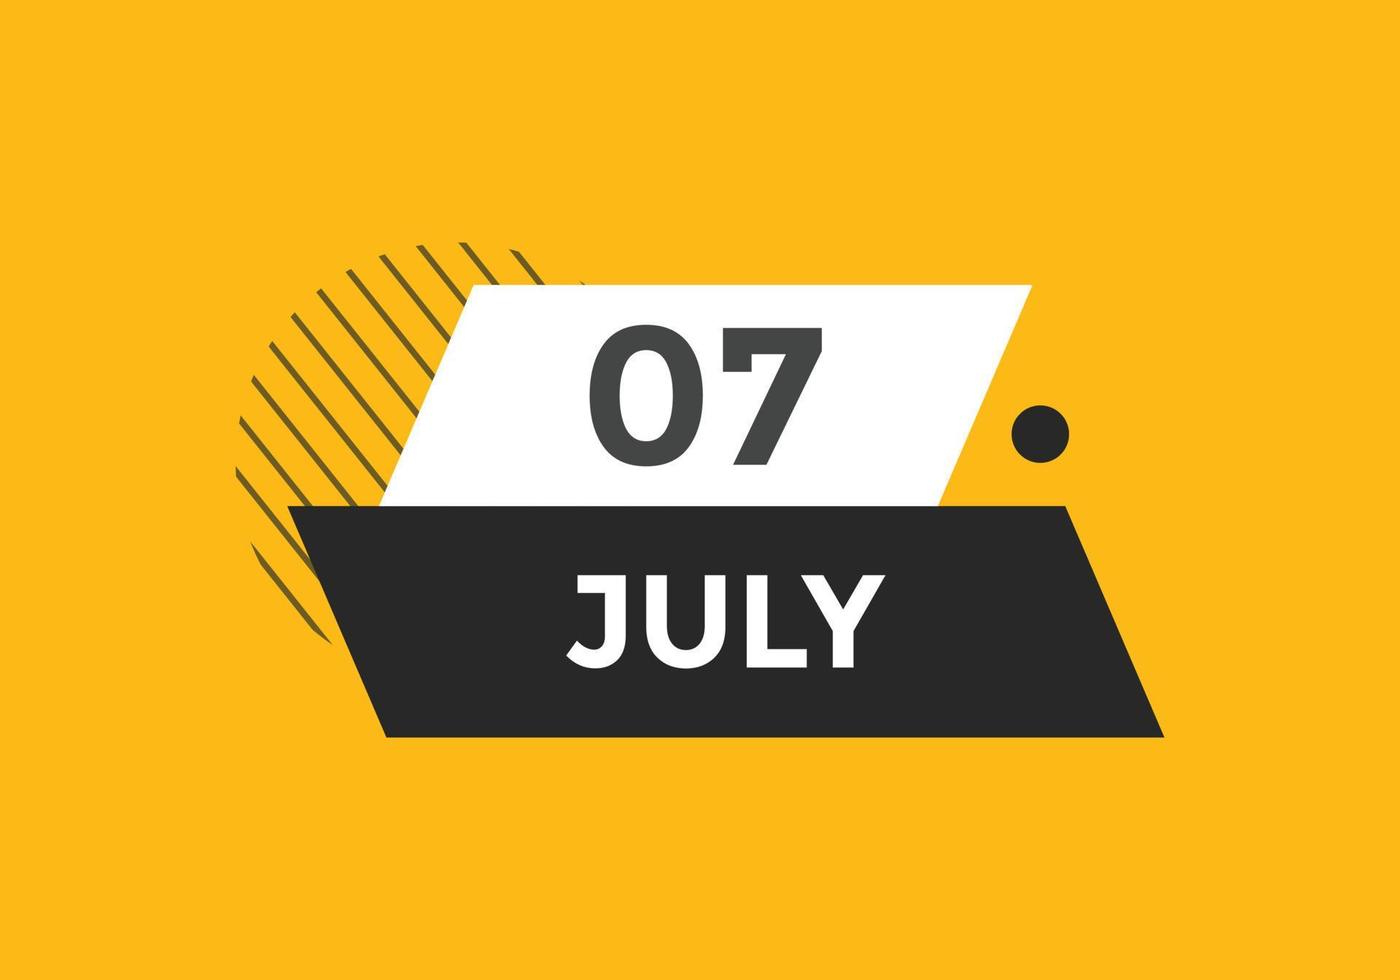 july 7 calendar reminder. 7th july daily calendar icon template. Calendar 7th july icon Design template. Vector illustration